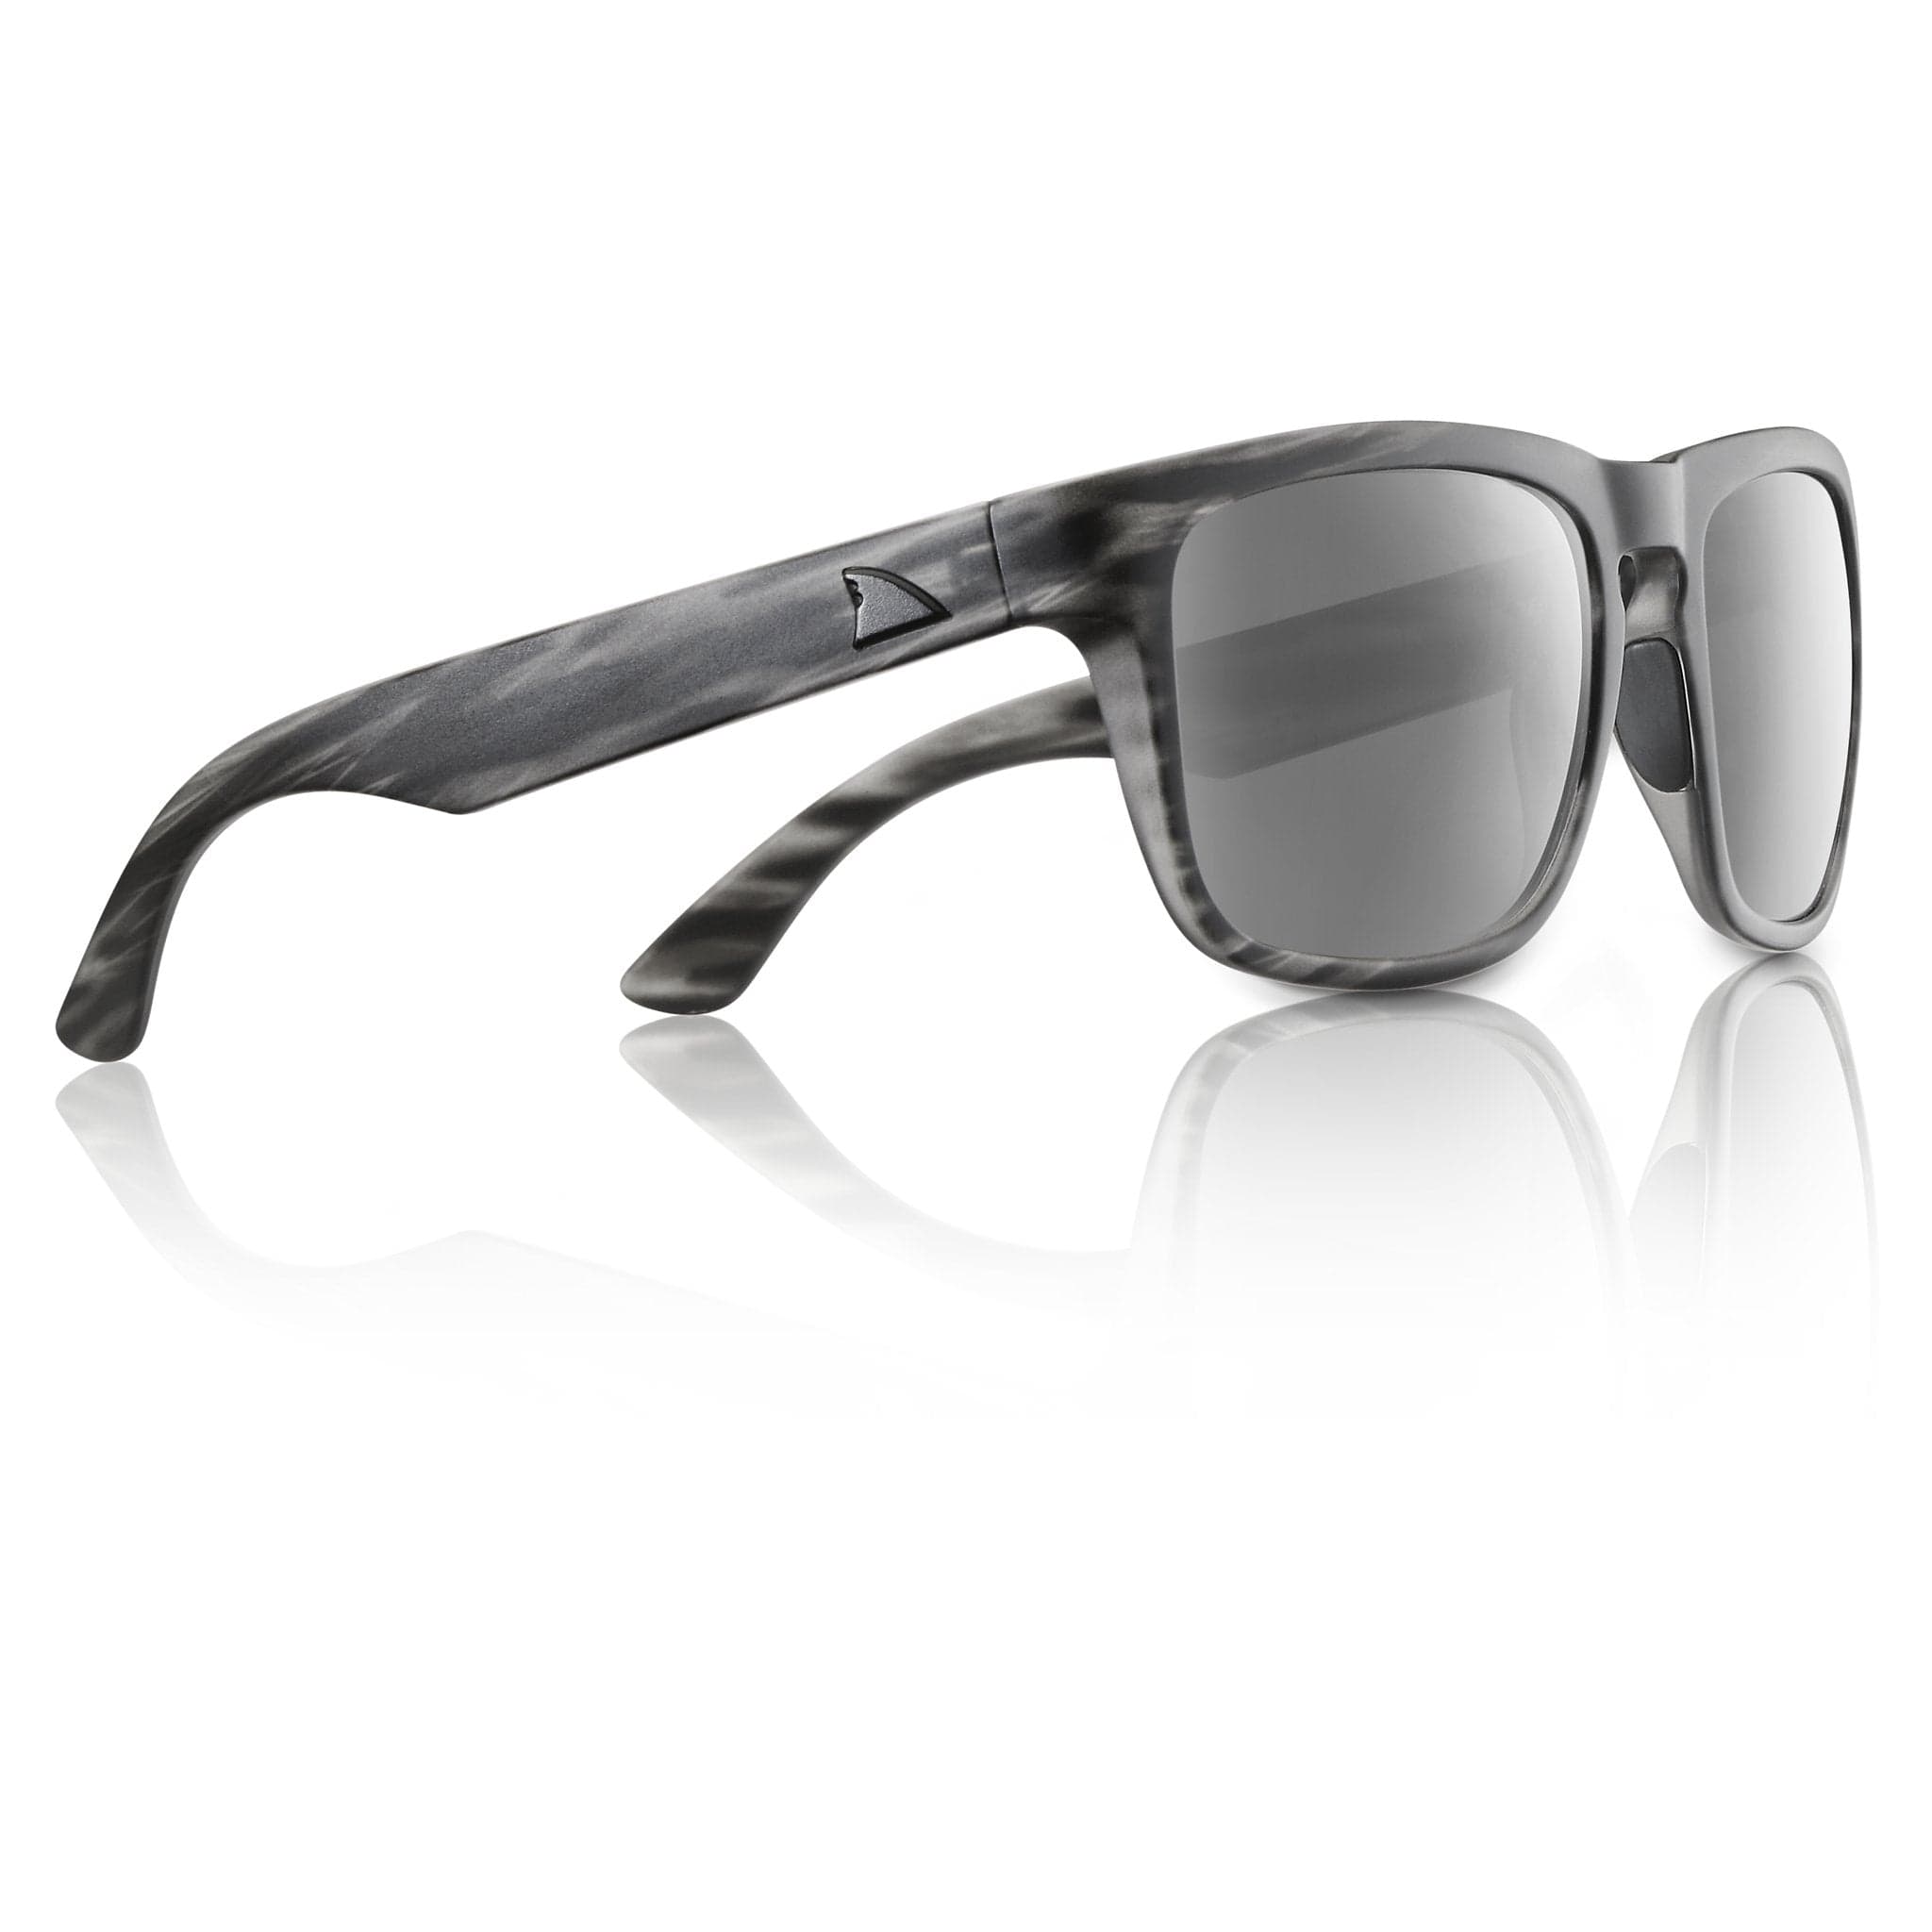 RedFin Tybee Polarized Fishing Sunglasses